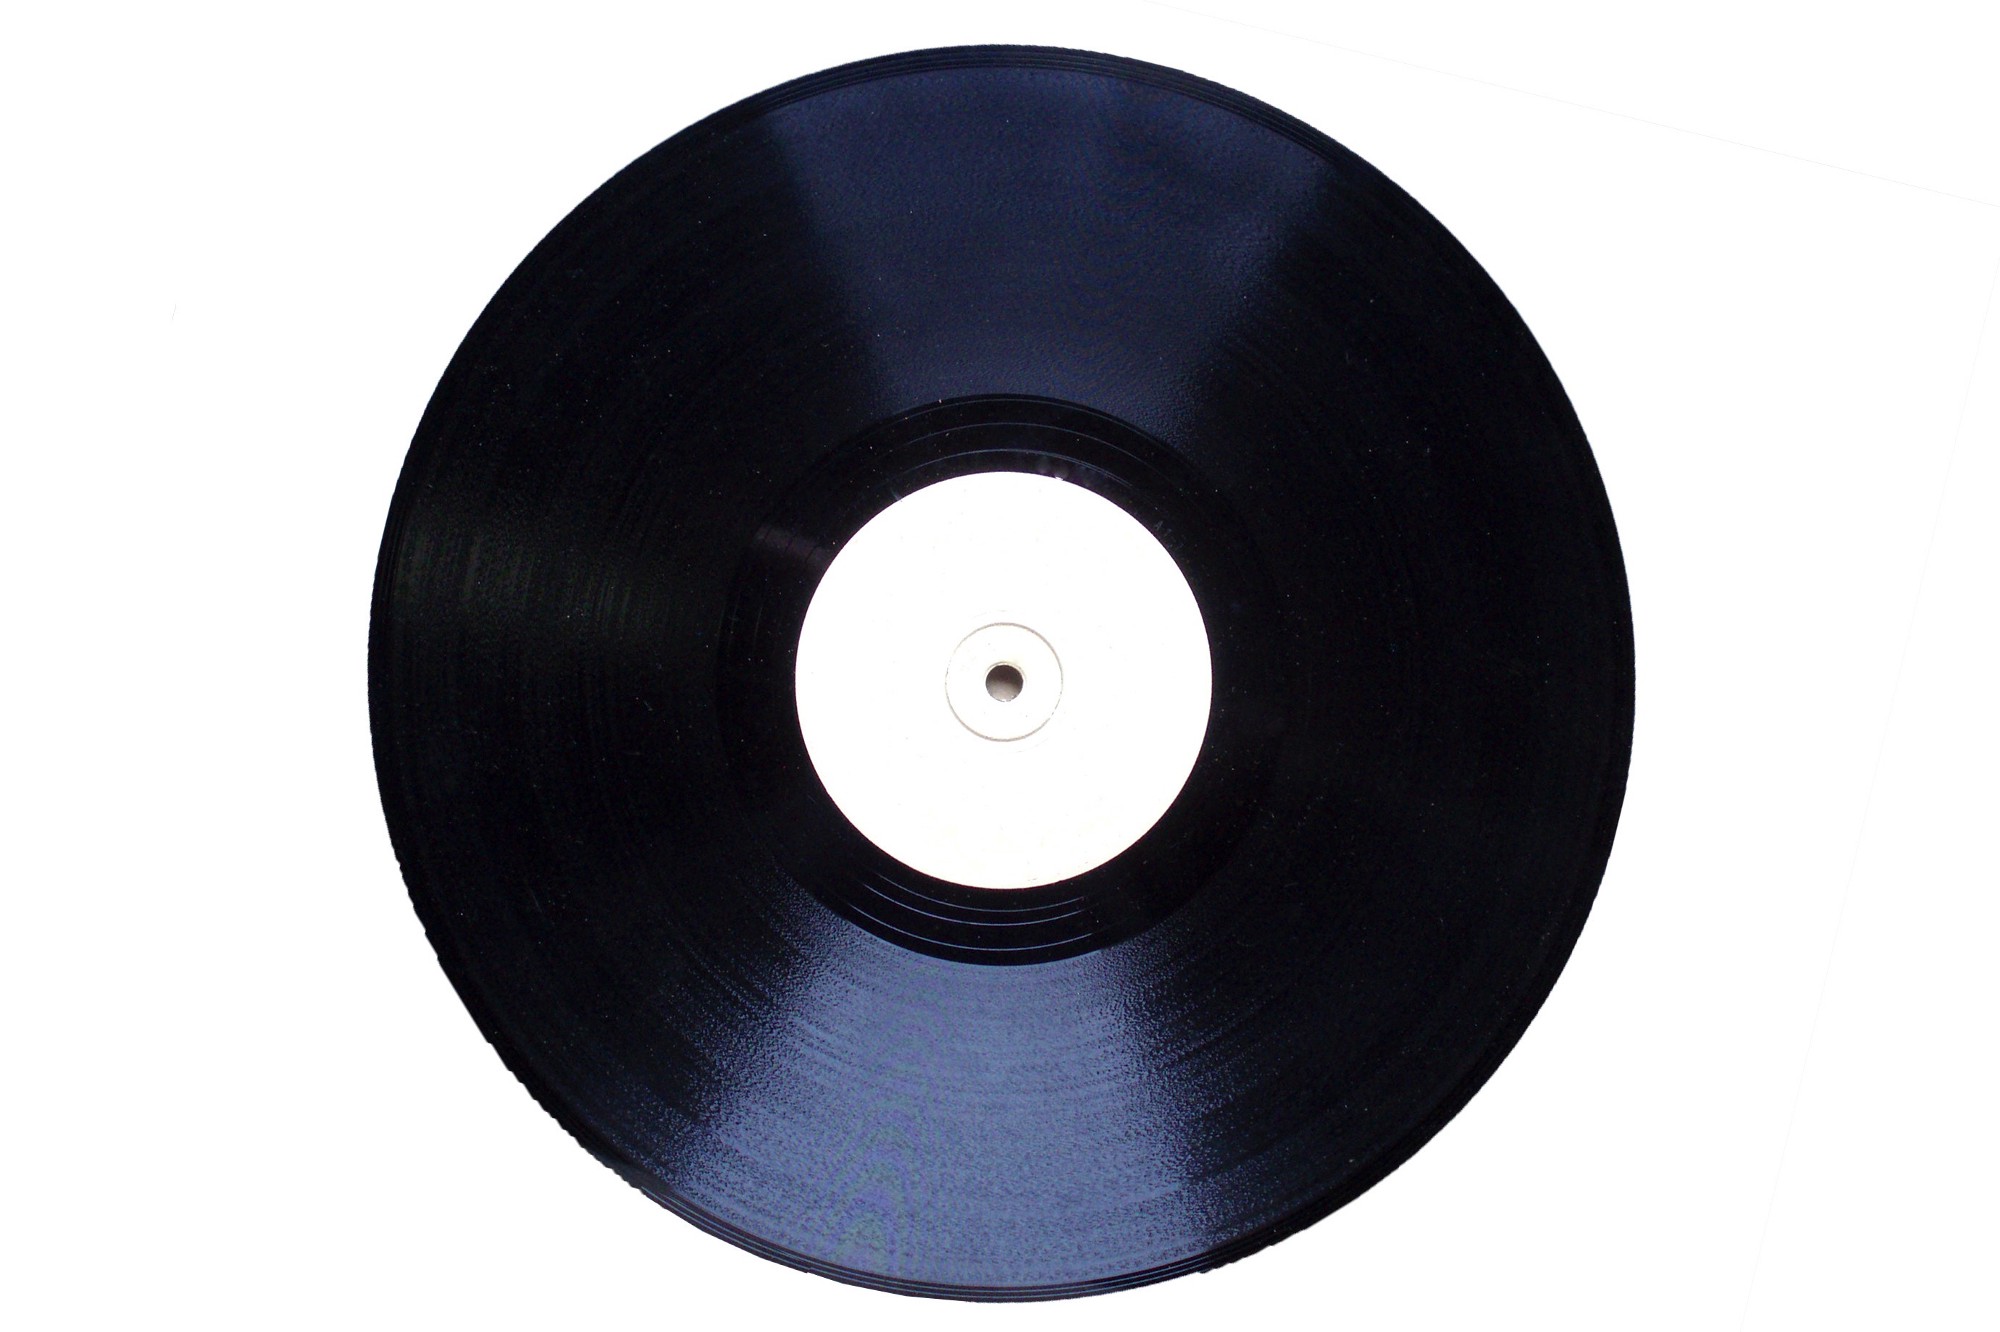 A vinyl record